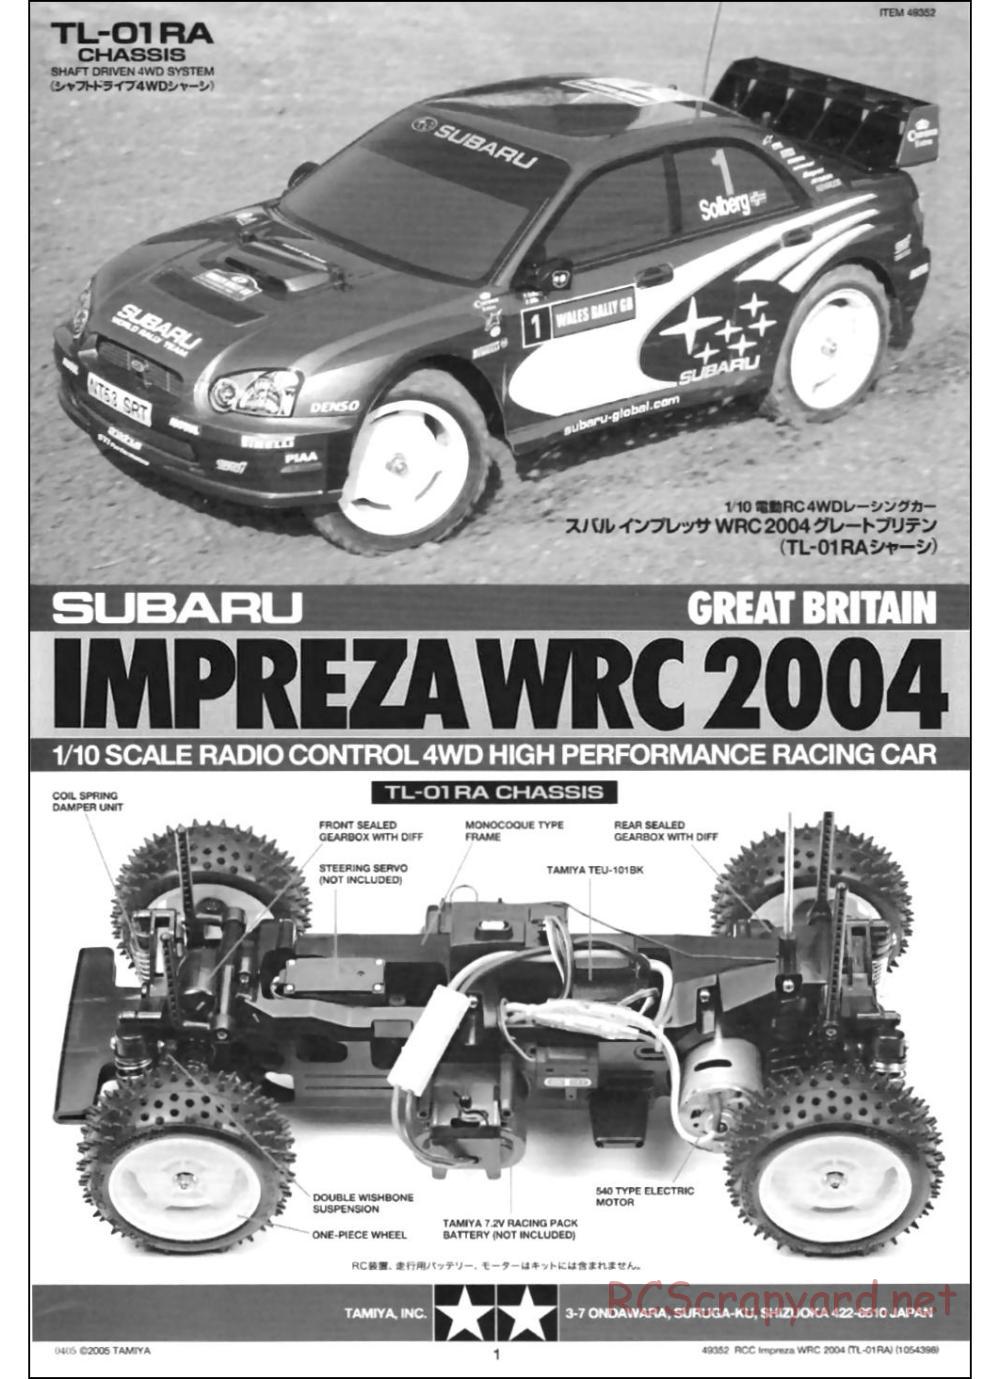 Tamiya - Subaru Impreza WRC 2004 Chassis - Manual - Page 1